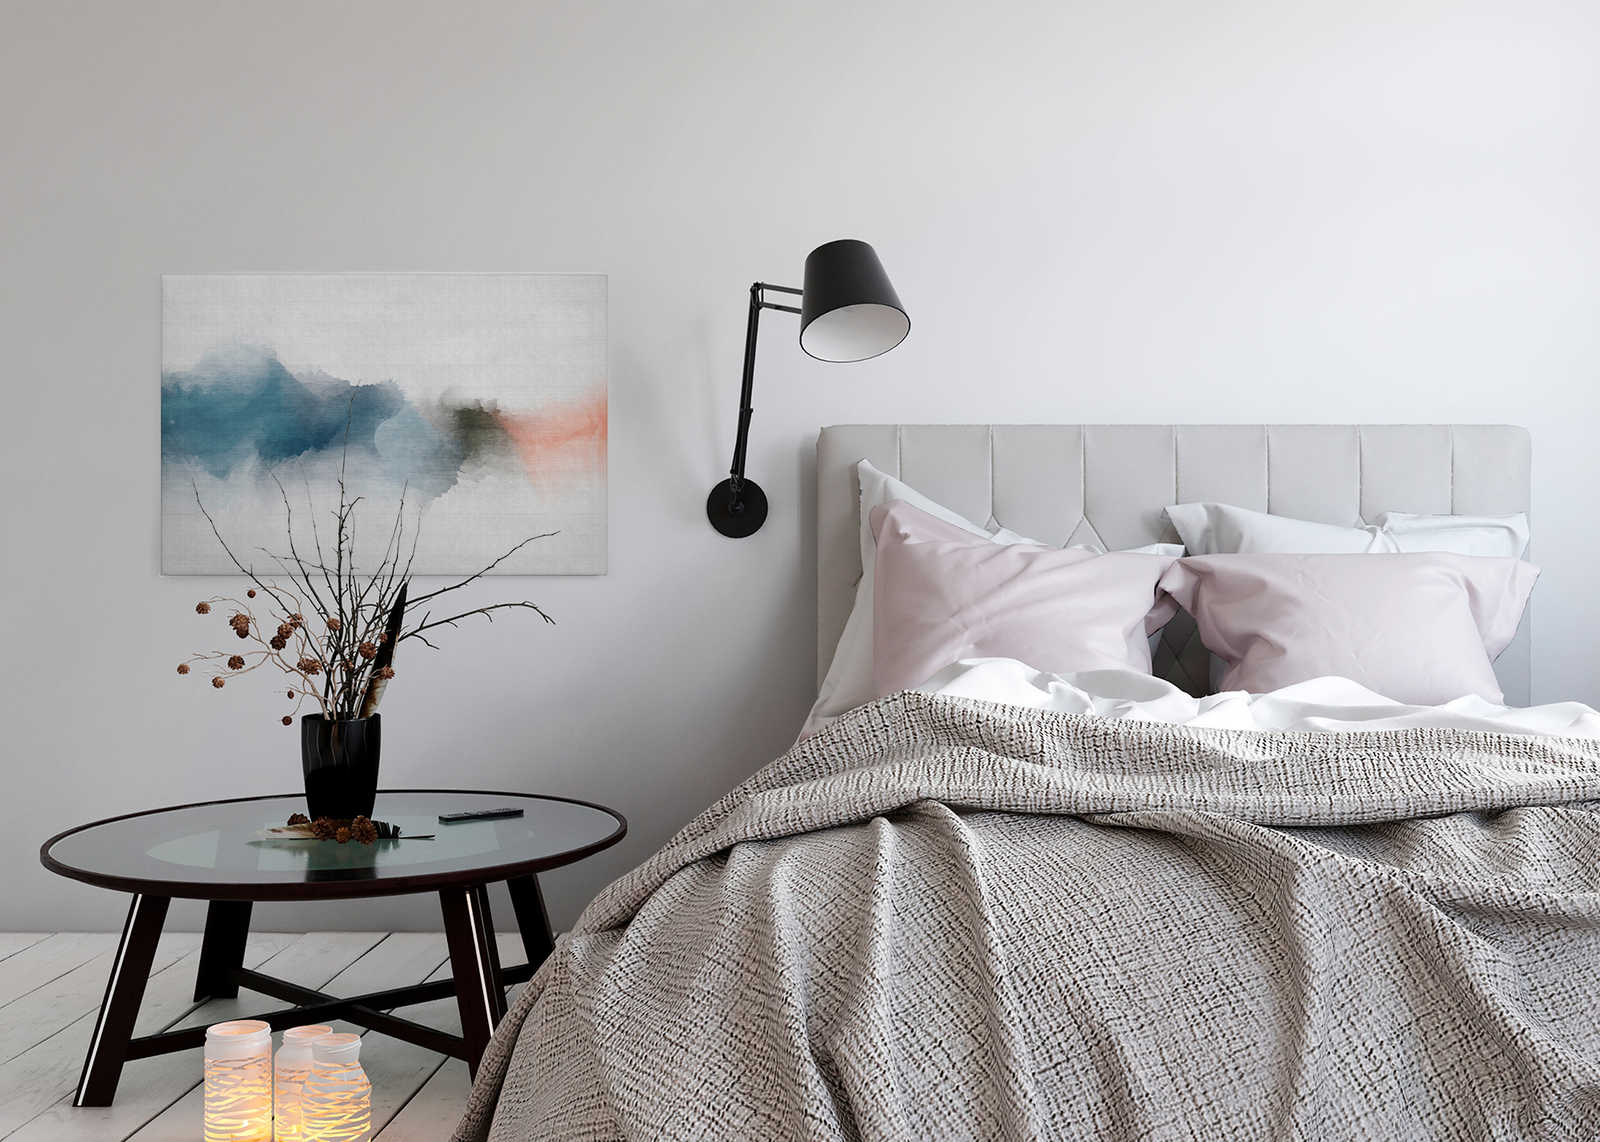             Daydream 1 - Toile minimaliste style aquarelle - À structure lin naturel - 0,90 m x 0,60 m
        